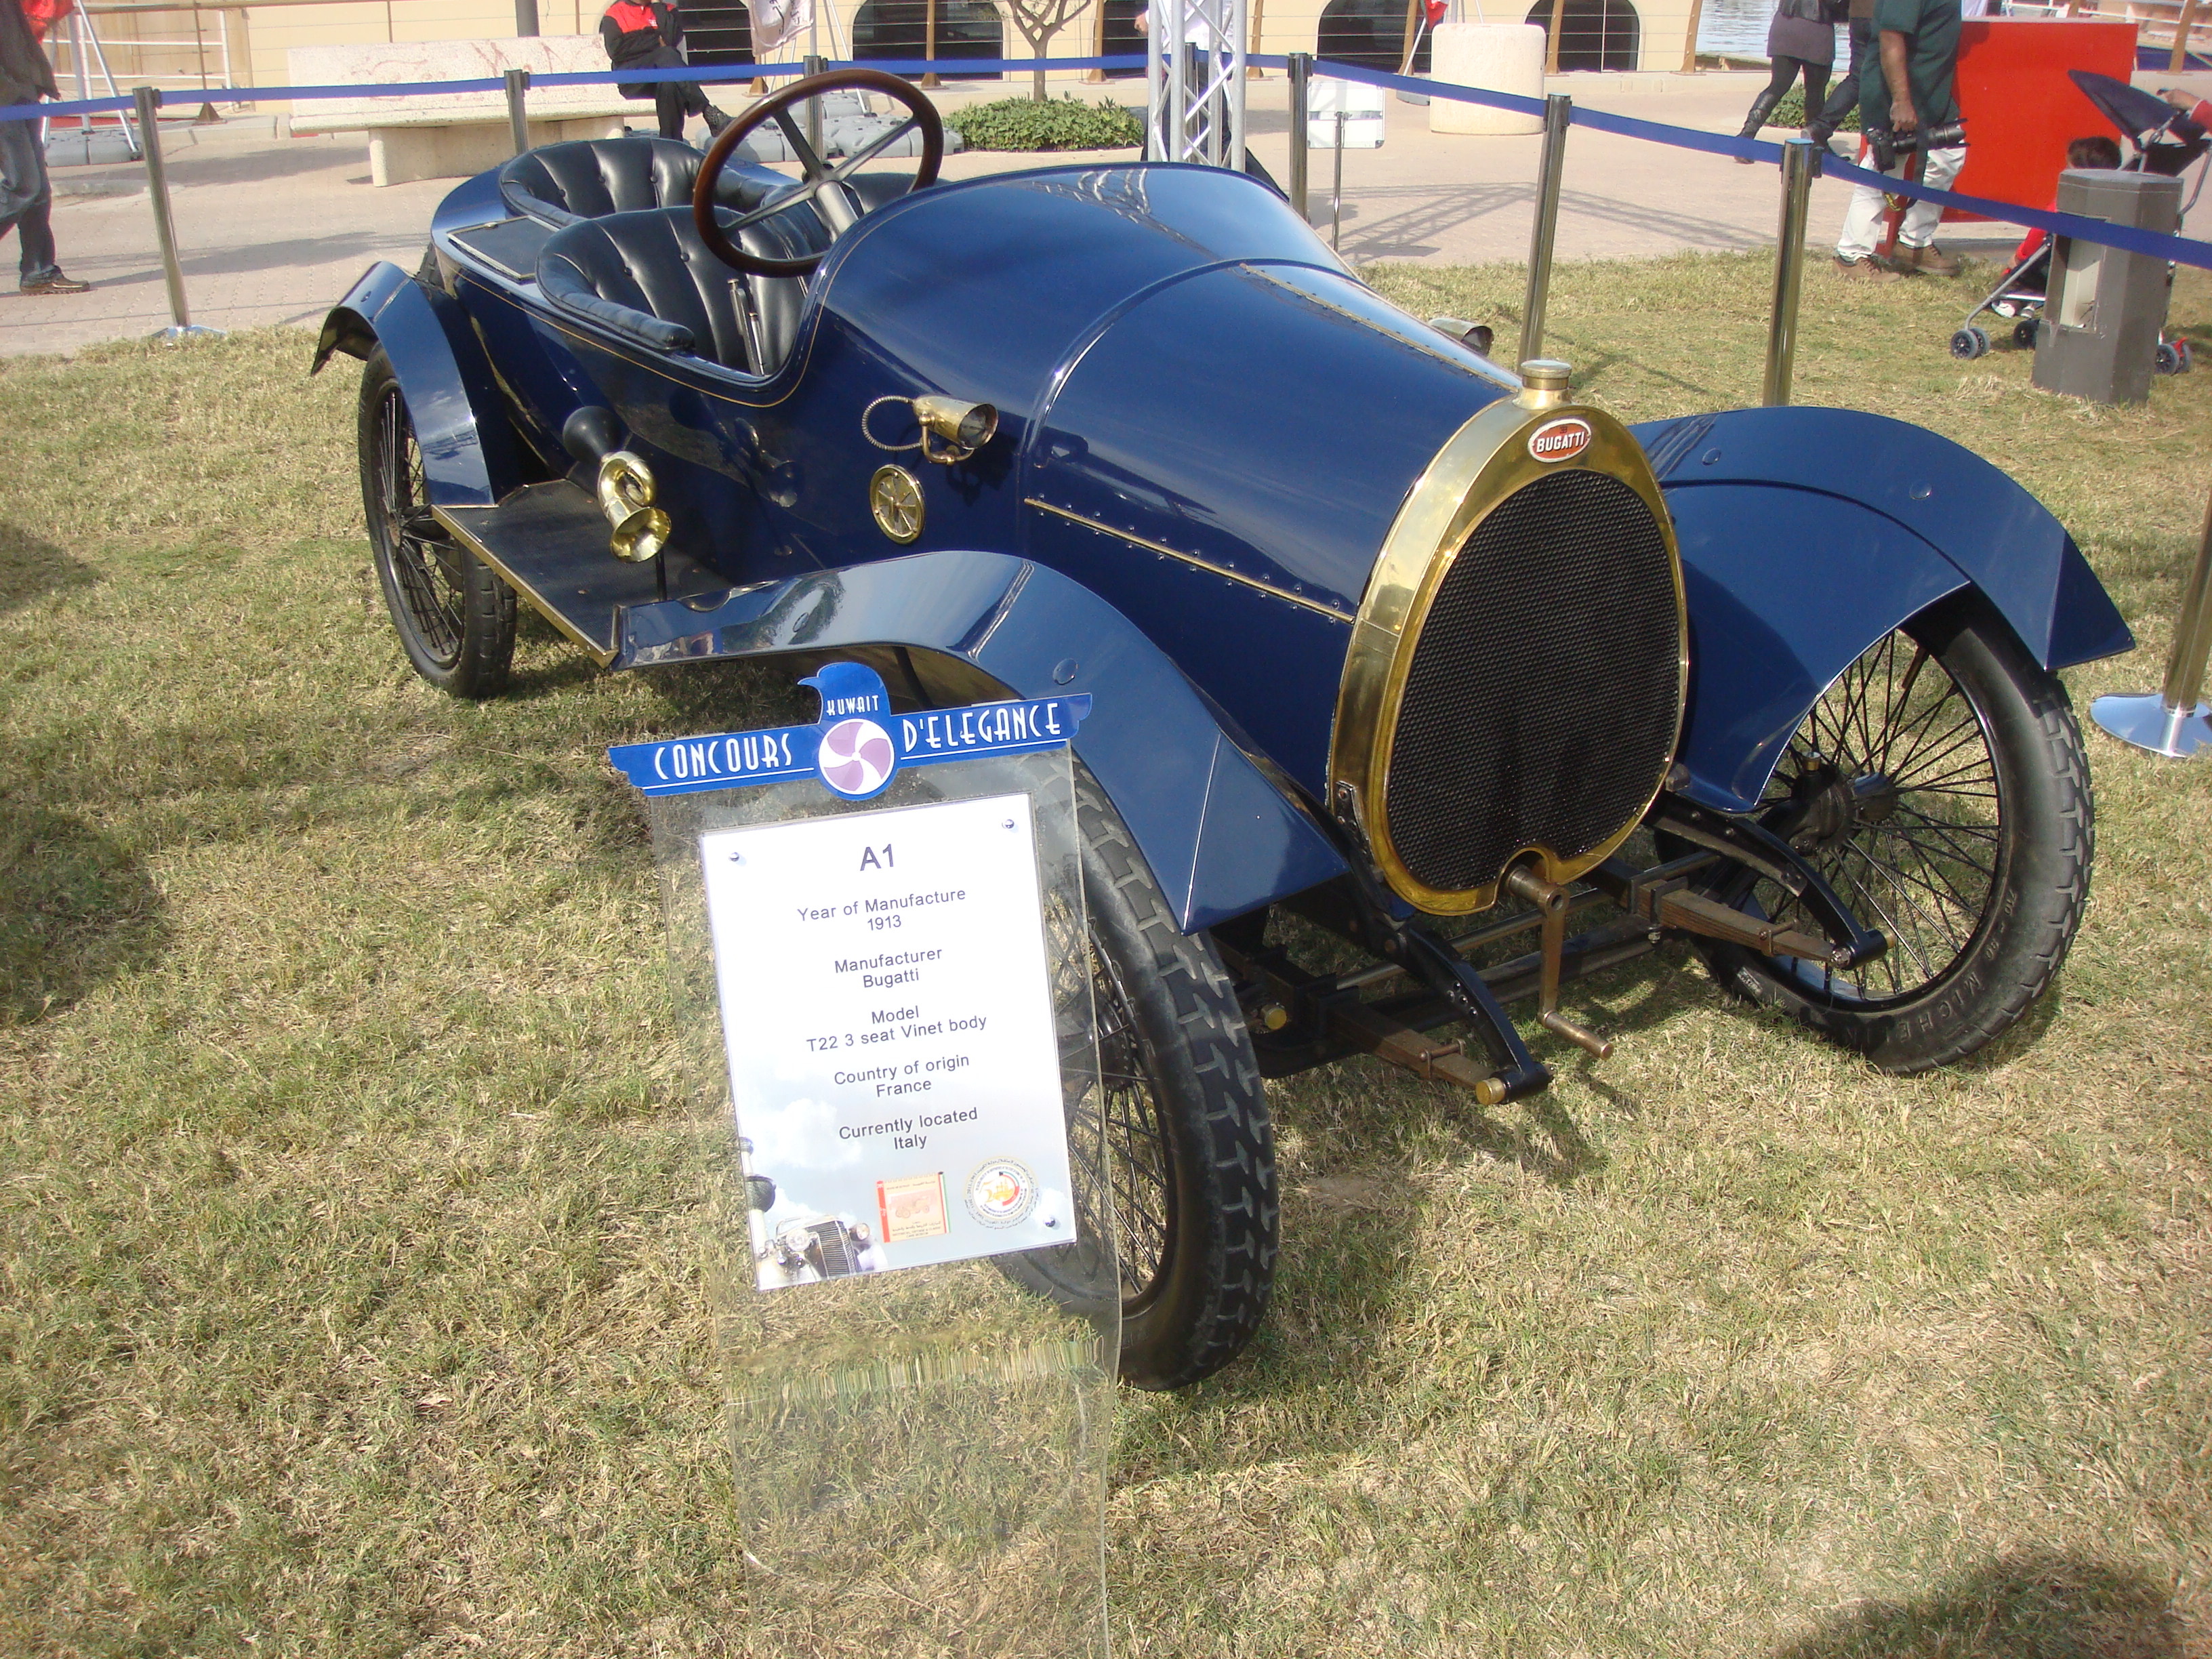 Bugatti, The Ultimate Gentlemen's Dream Car - Gentlemen's Guide OC